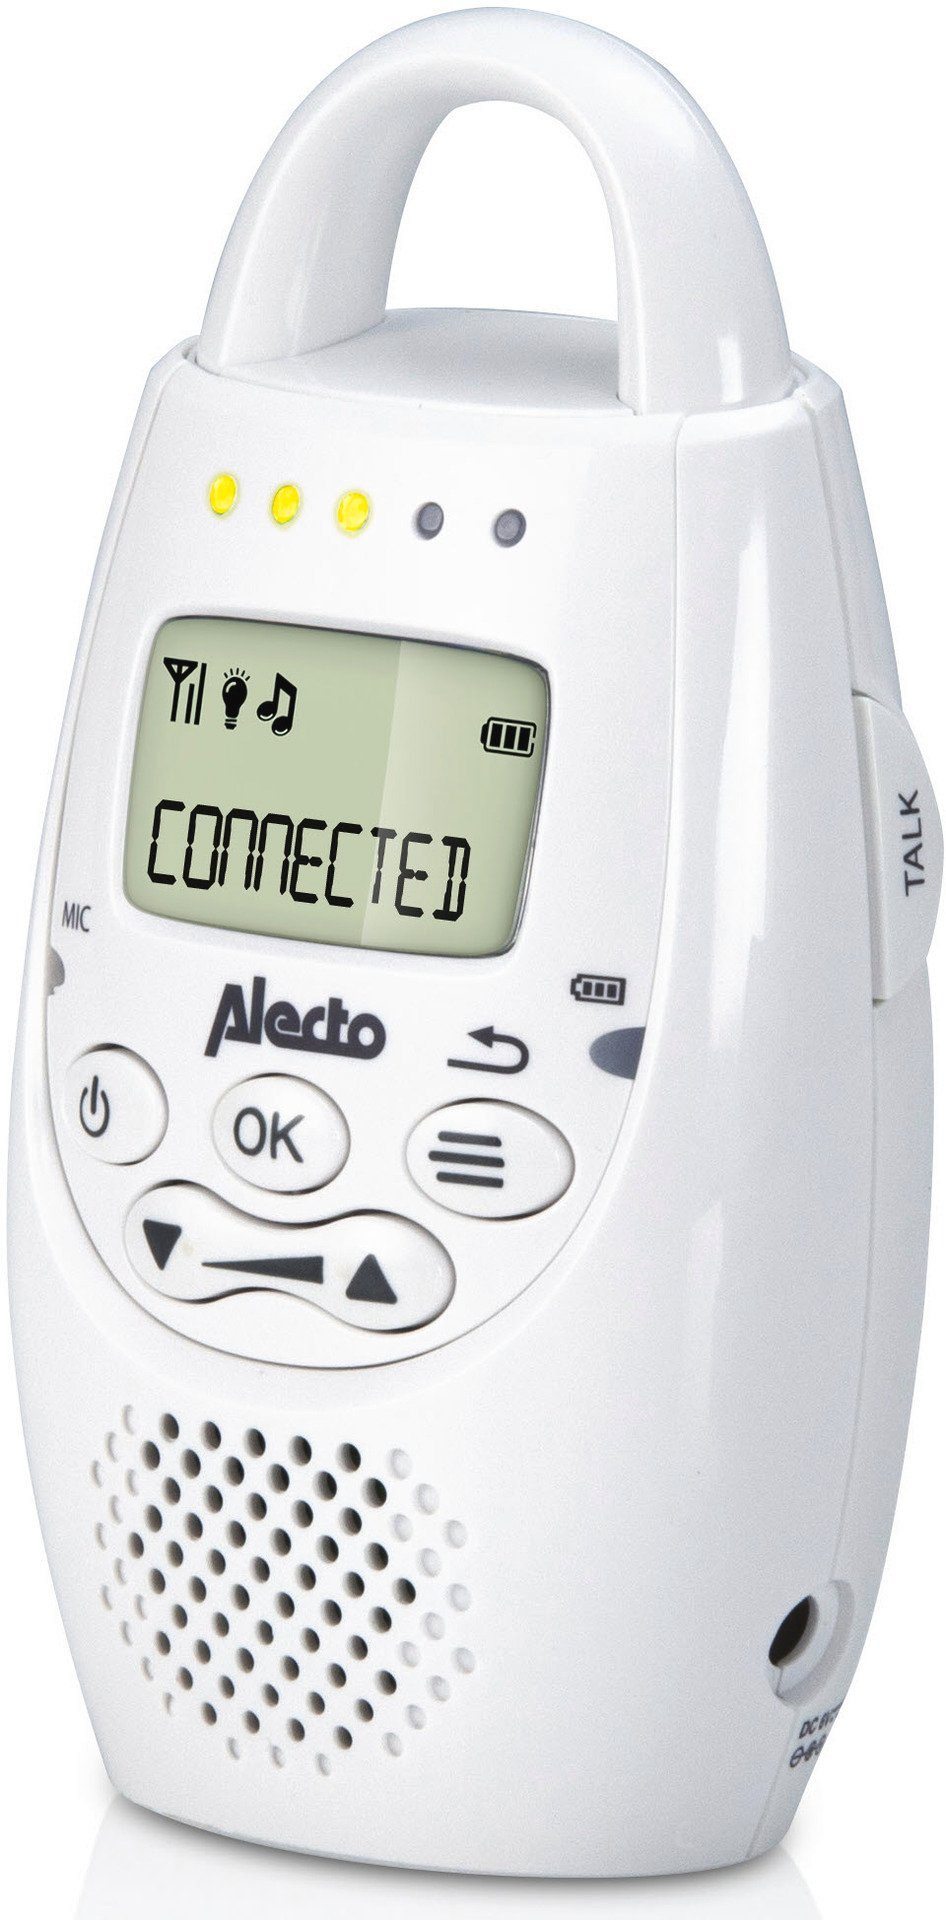 Alecto Babyphone DECT mit Eule, DBX-84 Babyphone Gegensprechfunktion